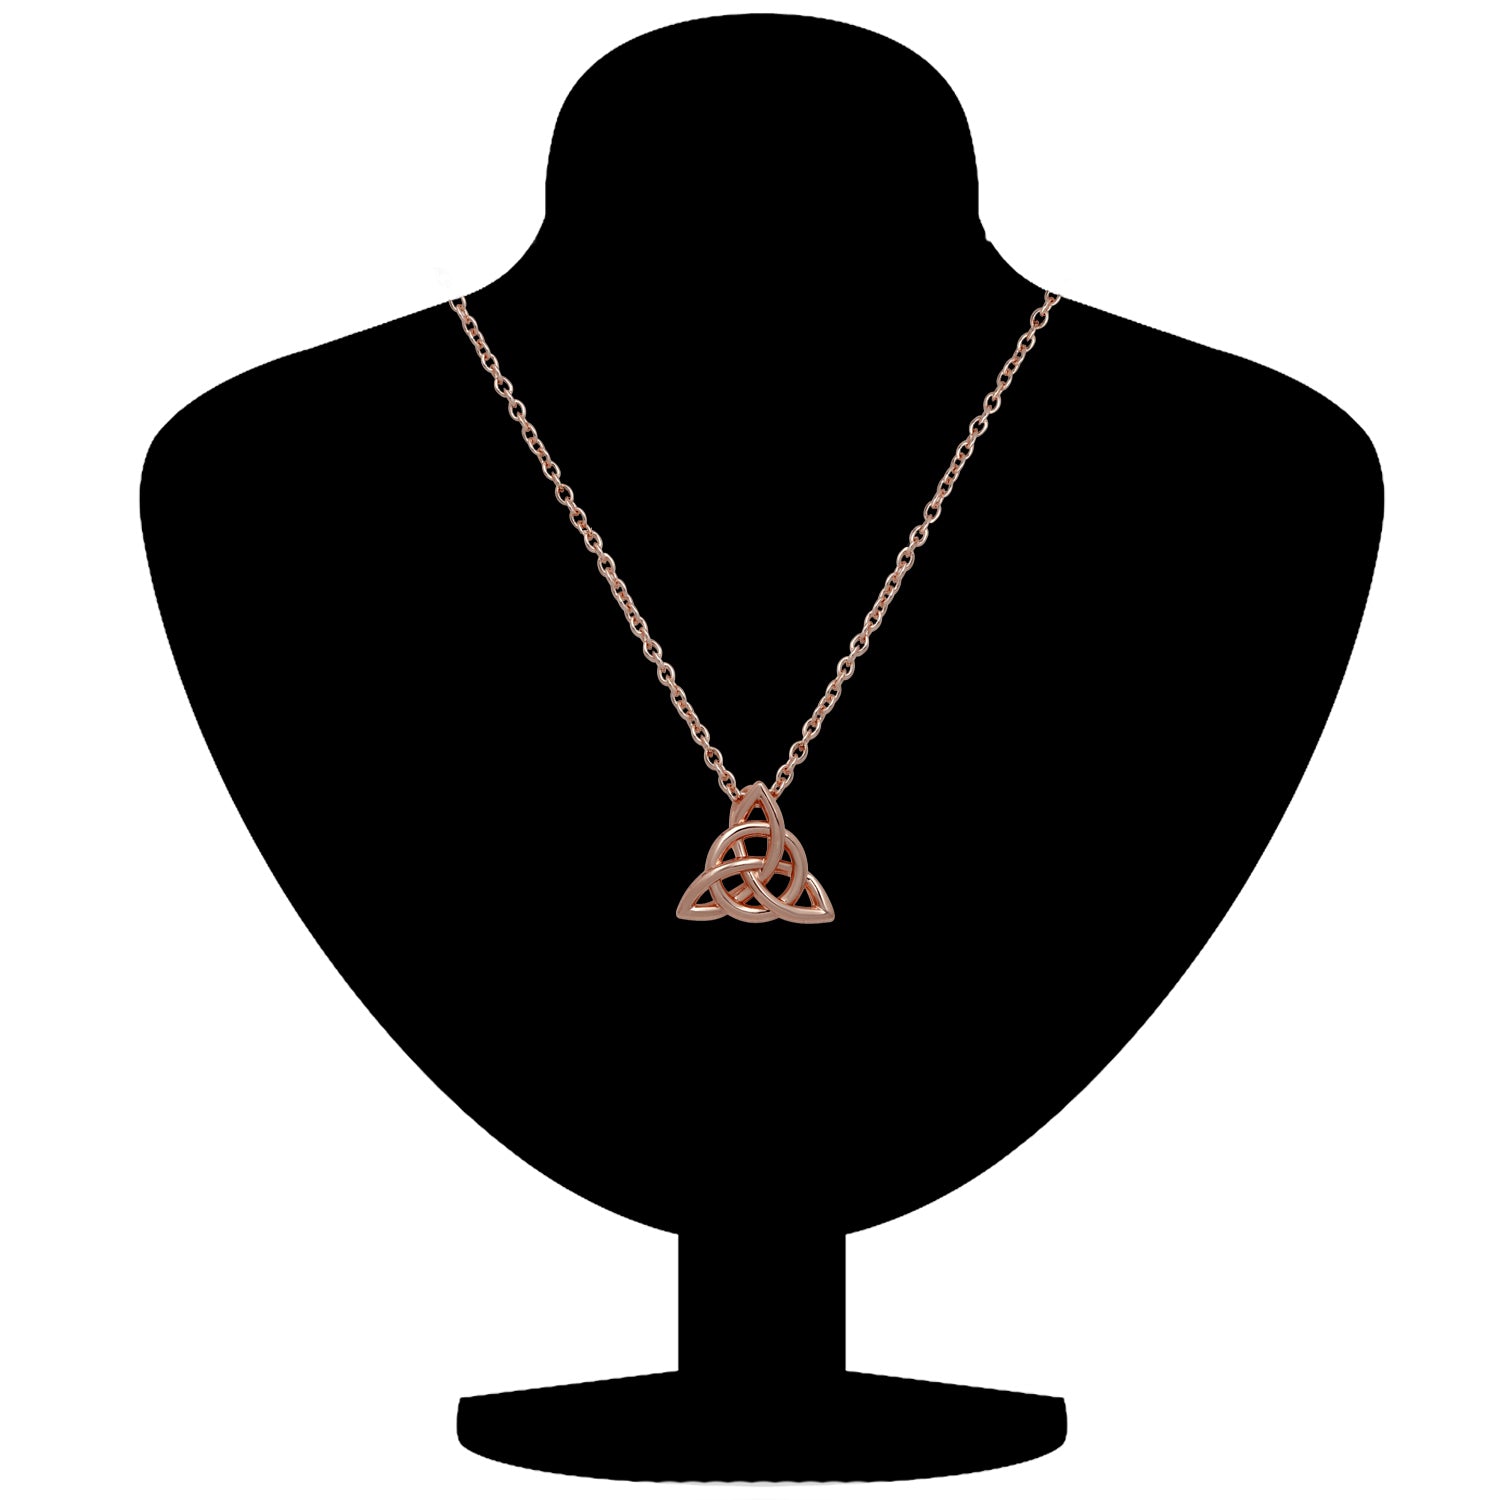 Irish Celtic Knot Triquetra Trinity Triangle Pendant Necklace